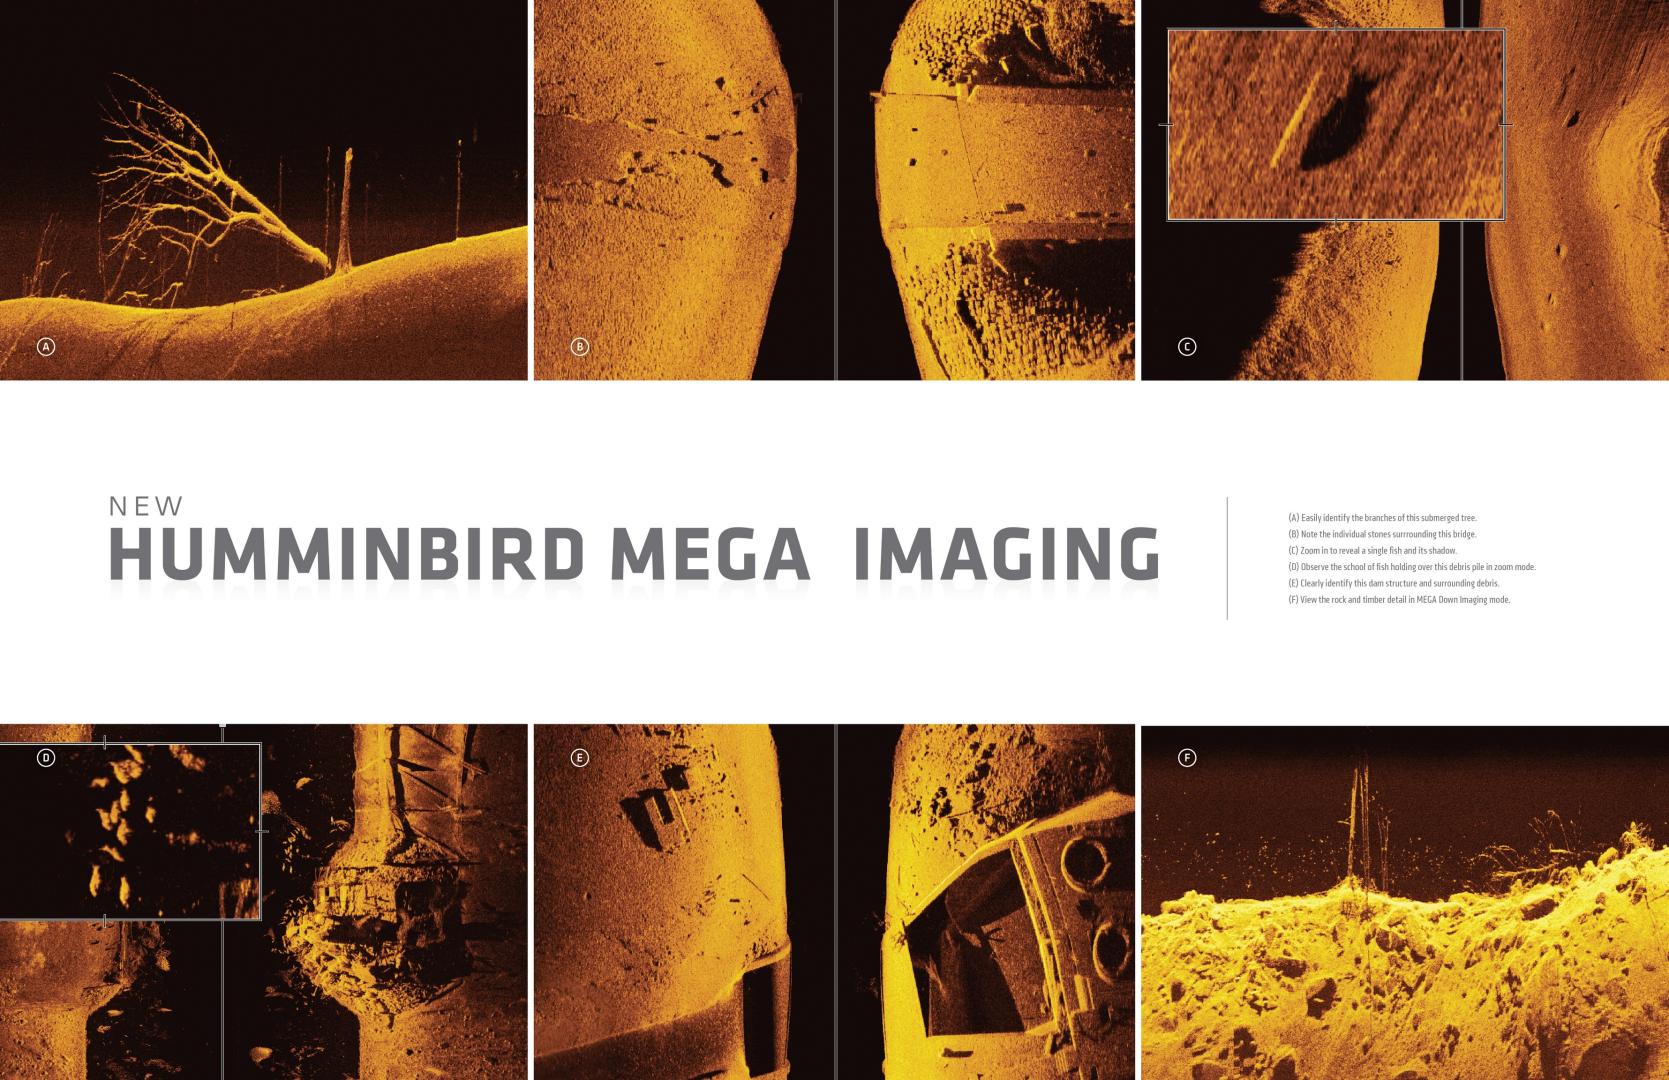 Pressmare  Fishfinder: Humminbird Introduces MEGA Imaging at